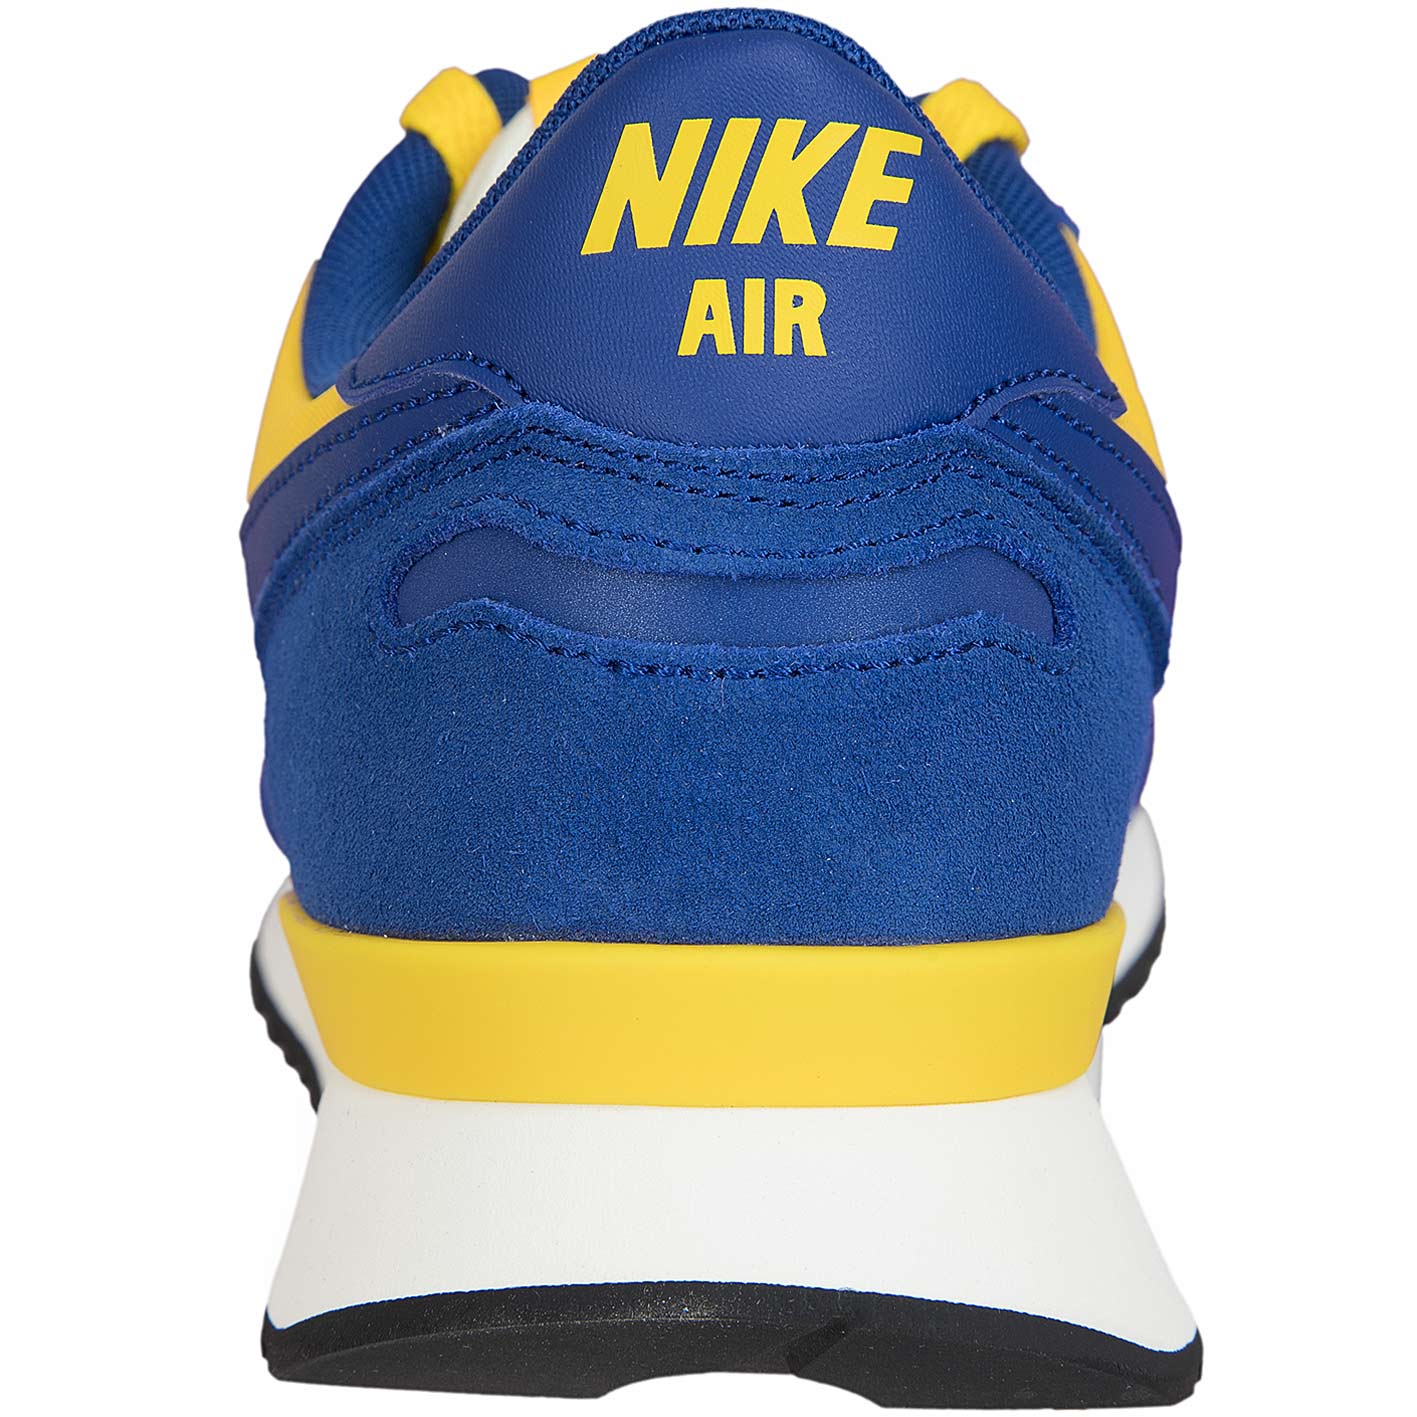 ☆ Nike Sneaker Air Vortex blau/gelb - hier bestellen!